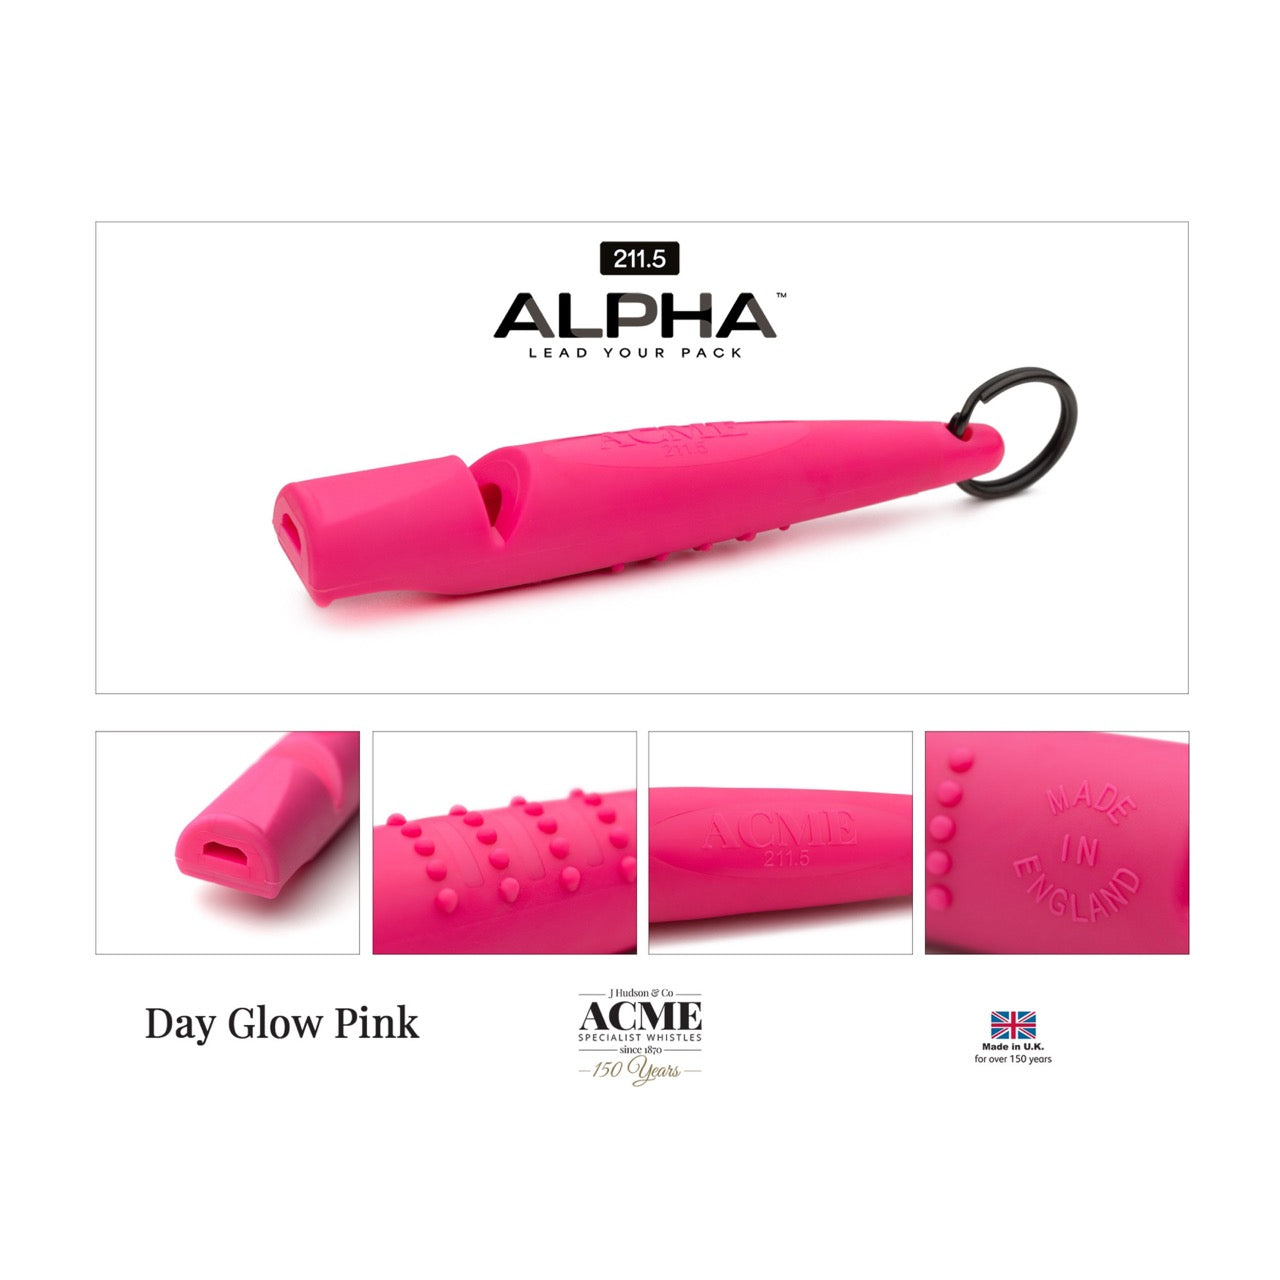 Acme ALPHA beste hondenfluit toonhoogte 211.5 neon pink